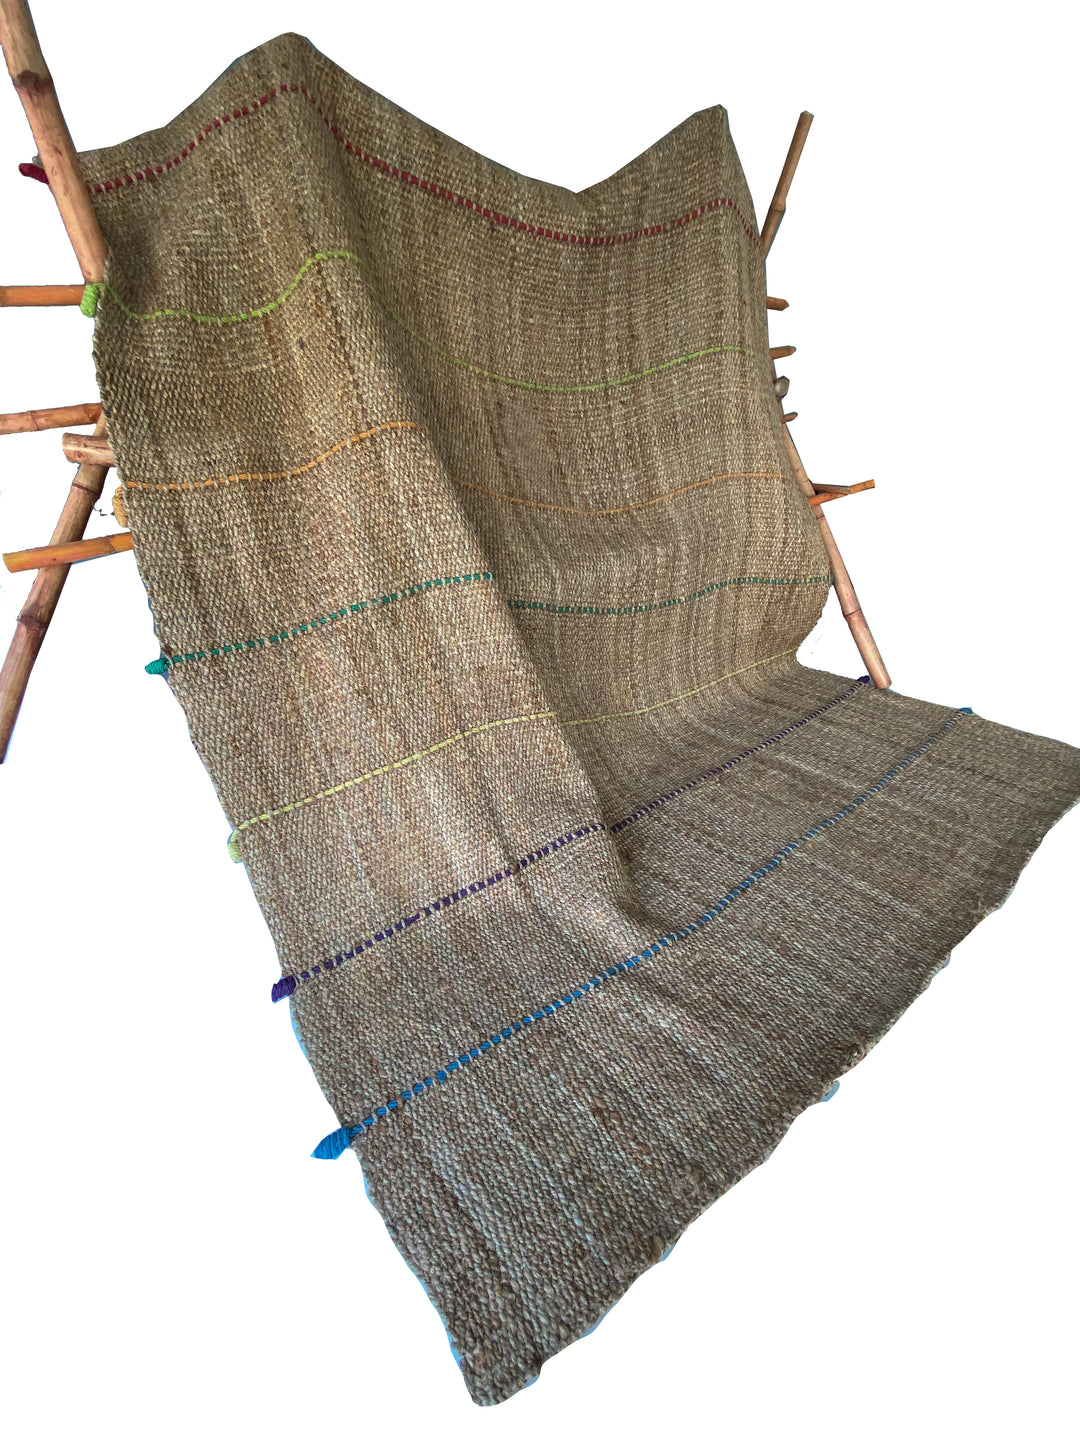 Natural Flatwoven Jute Rug - Size: 10.3 x 8.1 - Imam Carpet Co